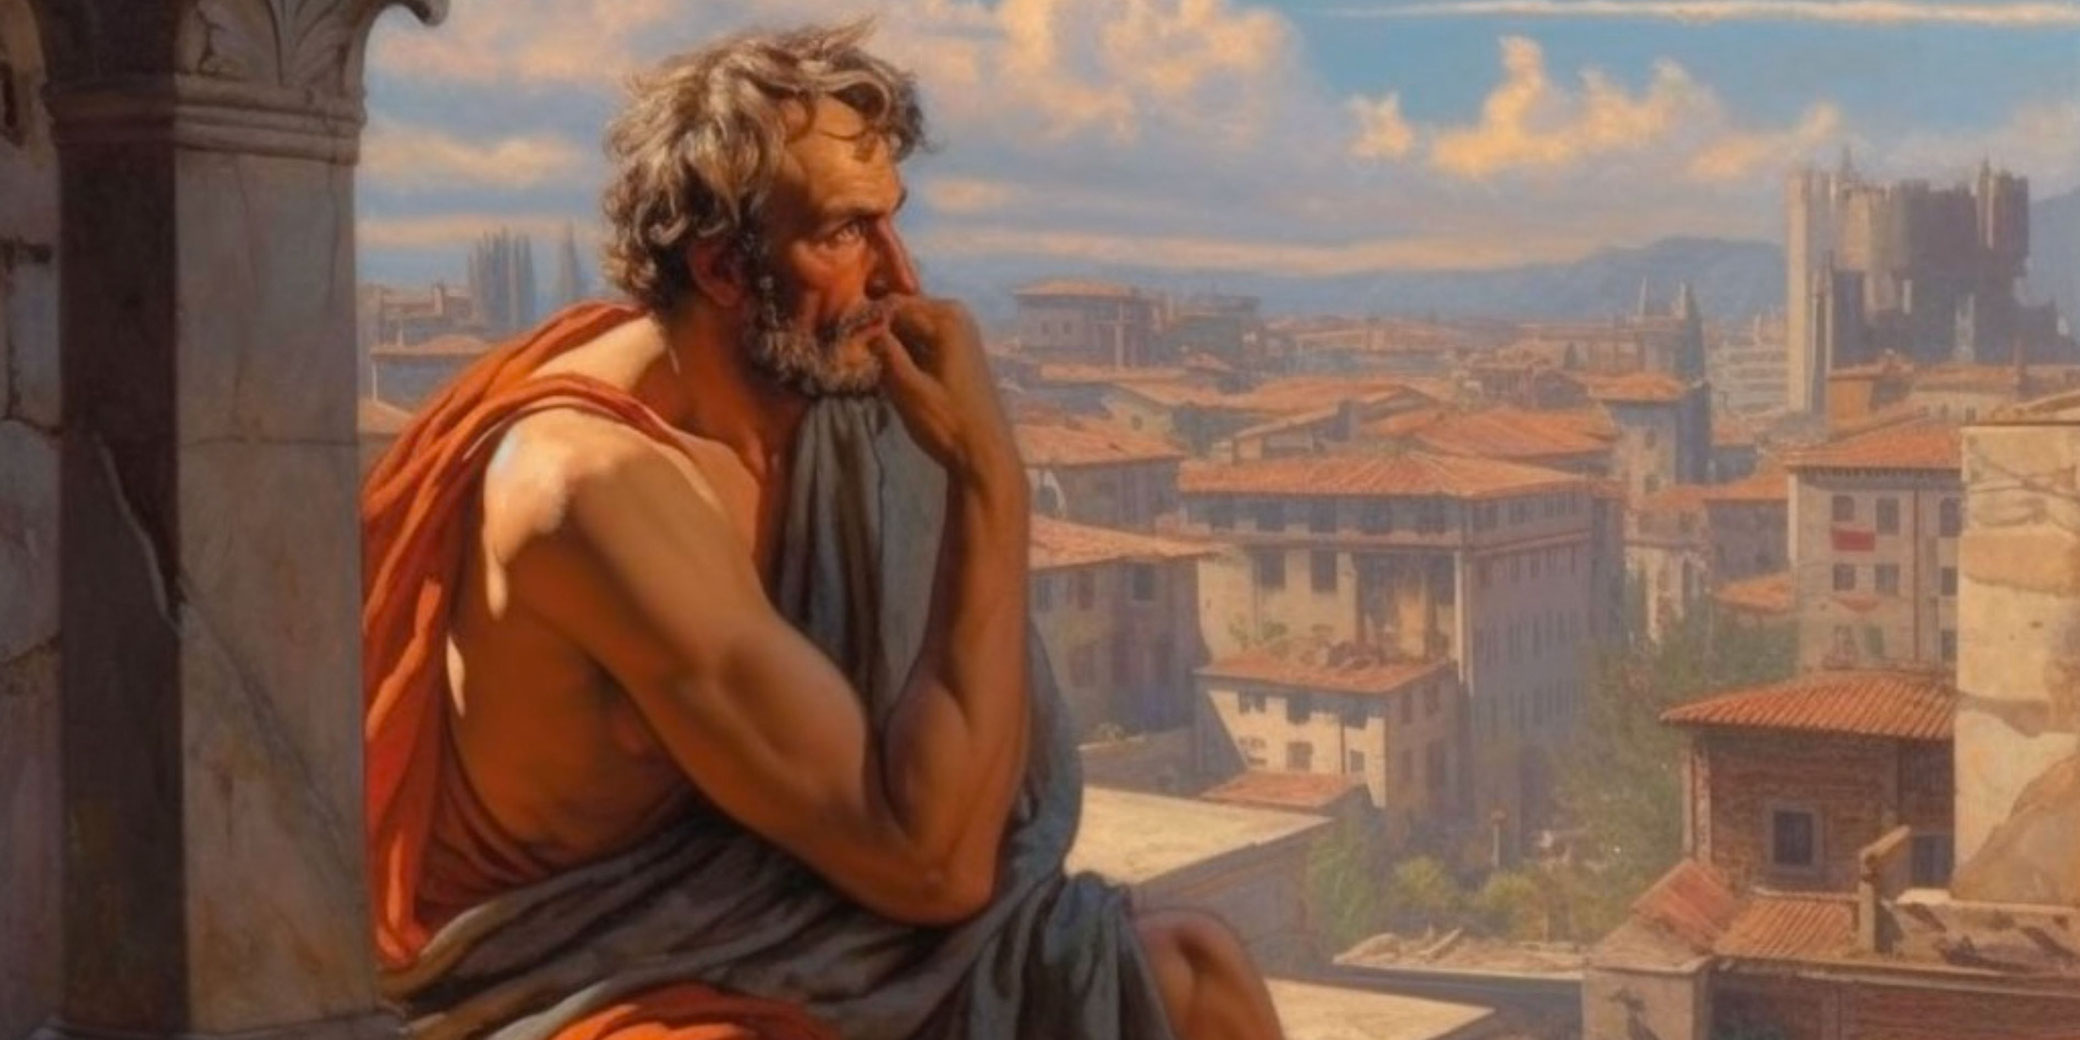 Seneca: The Roman philosopher who tried to talk sense to Emperor Nero but paid the price